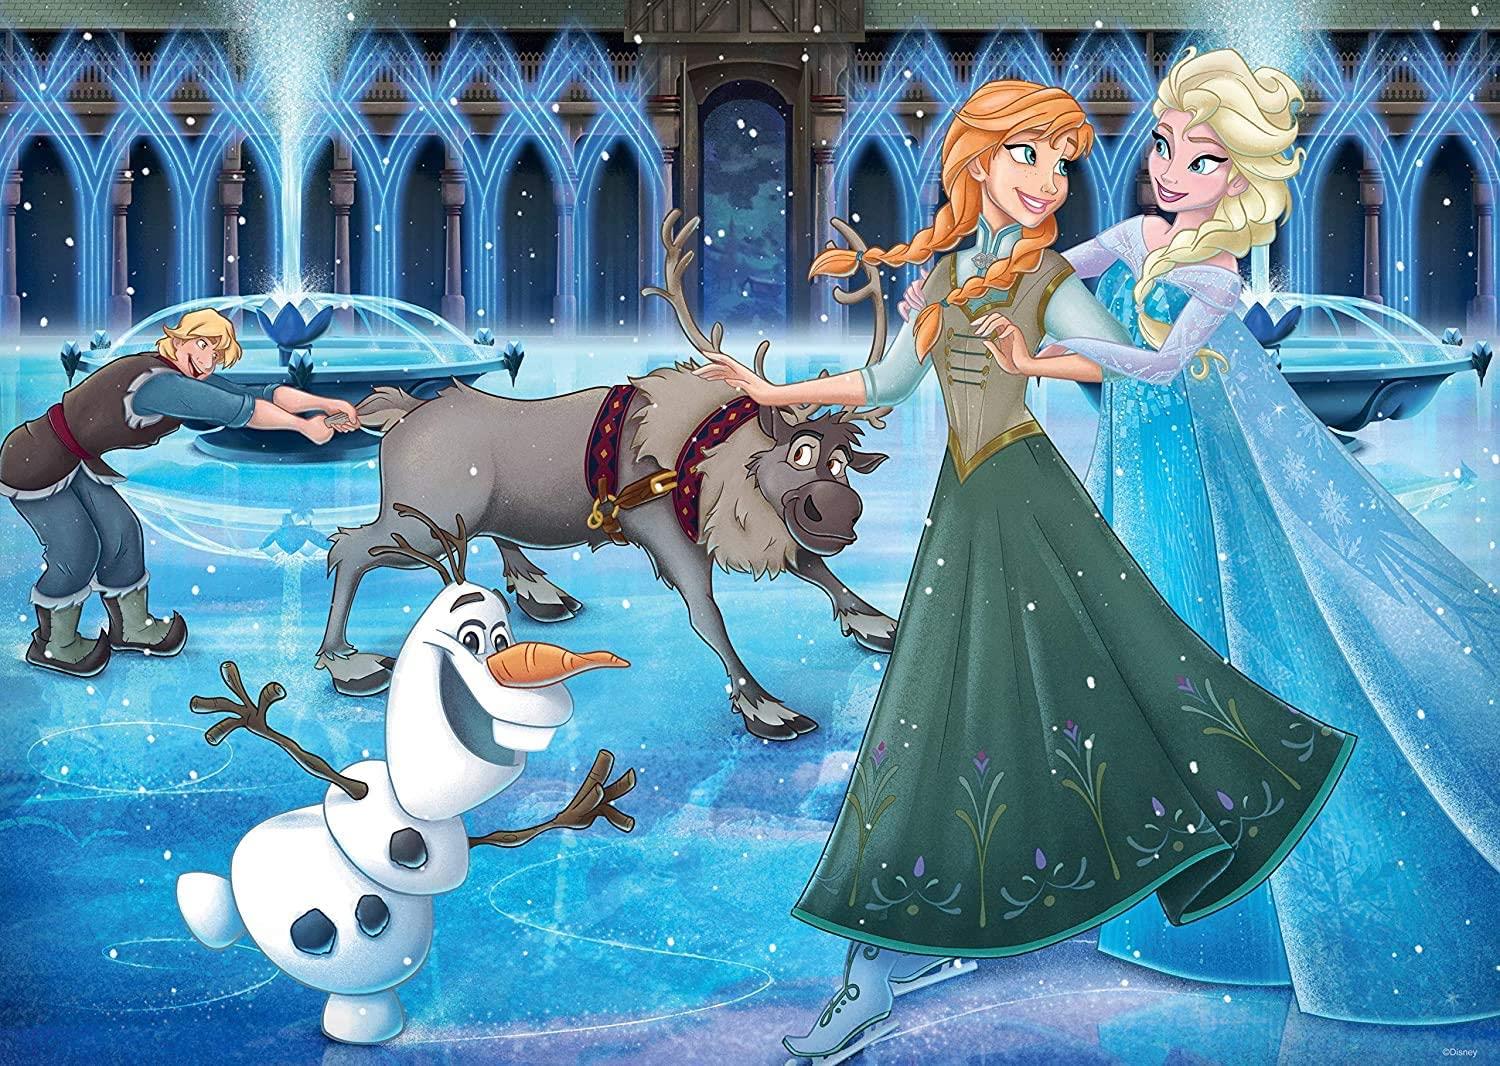 Ravensburger Disney Collector's Edition Frozen Jigsaw Puzzle (1000 Pieces)